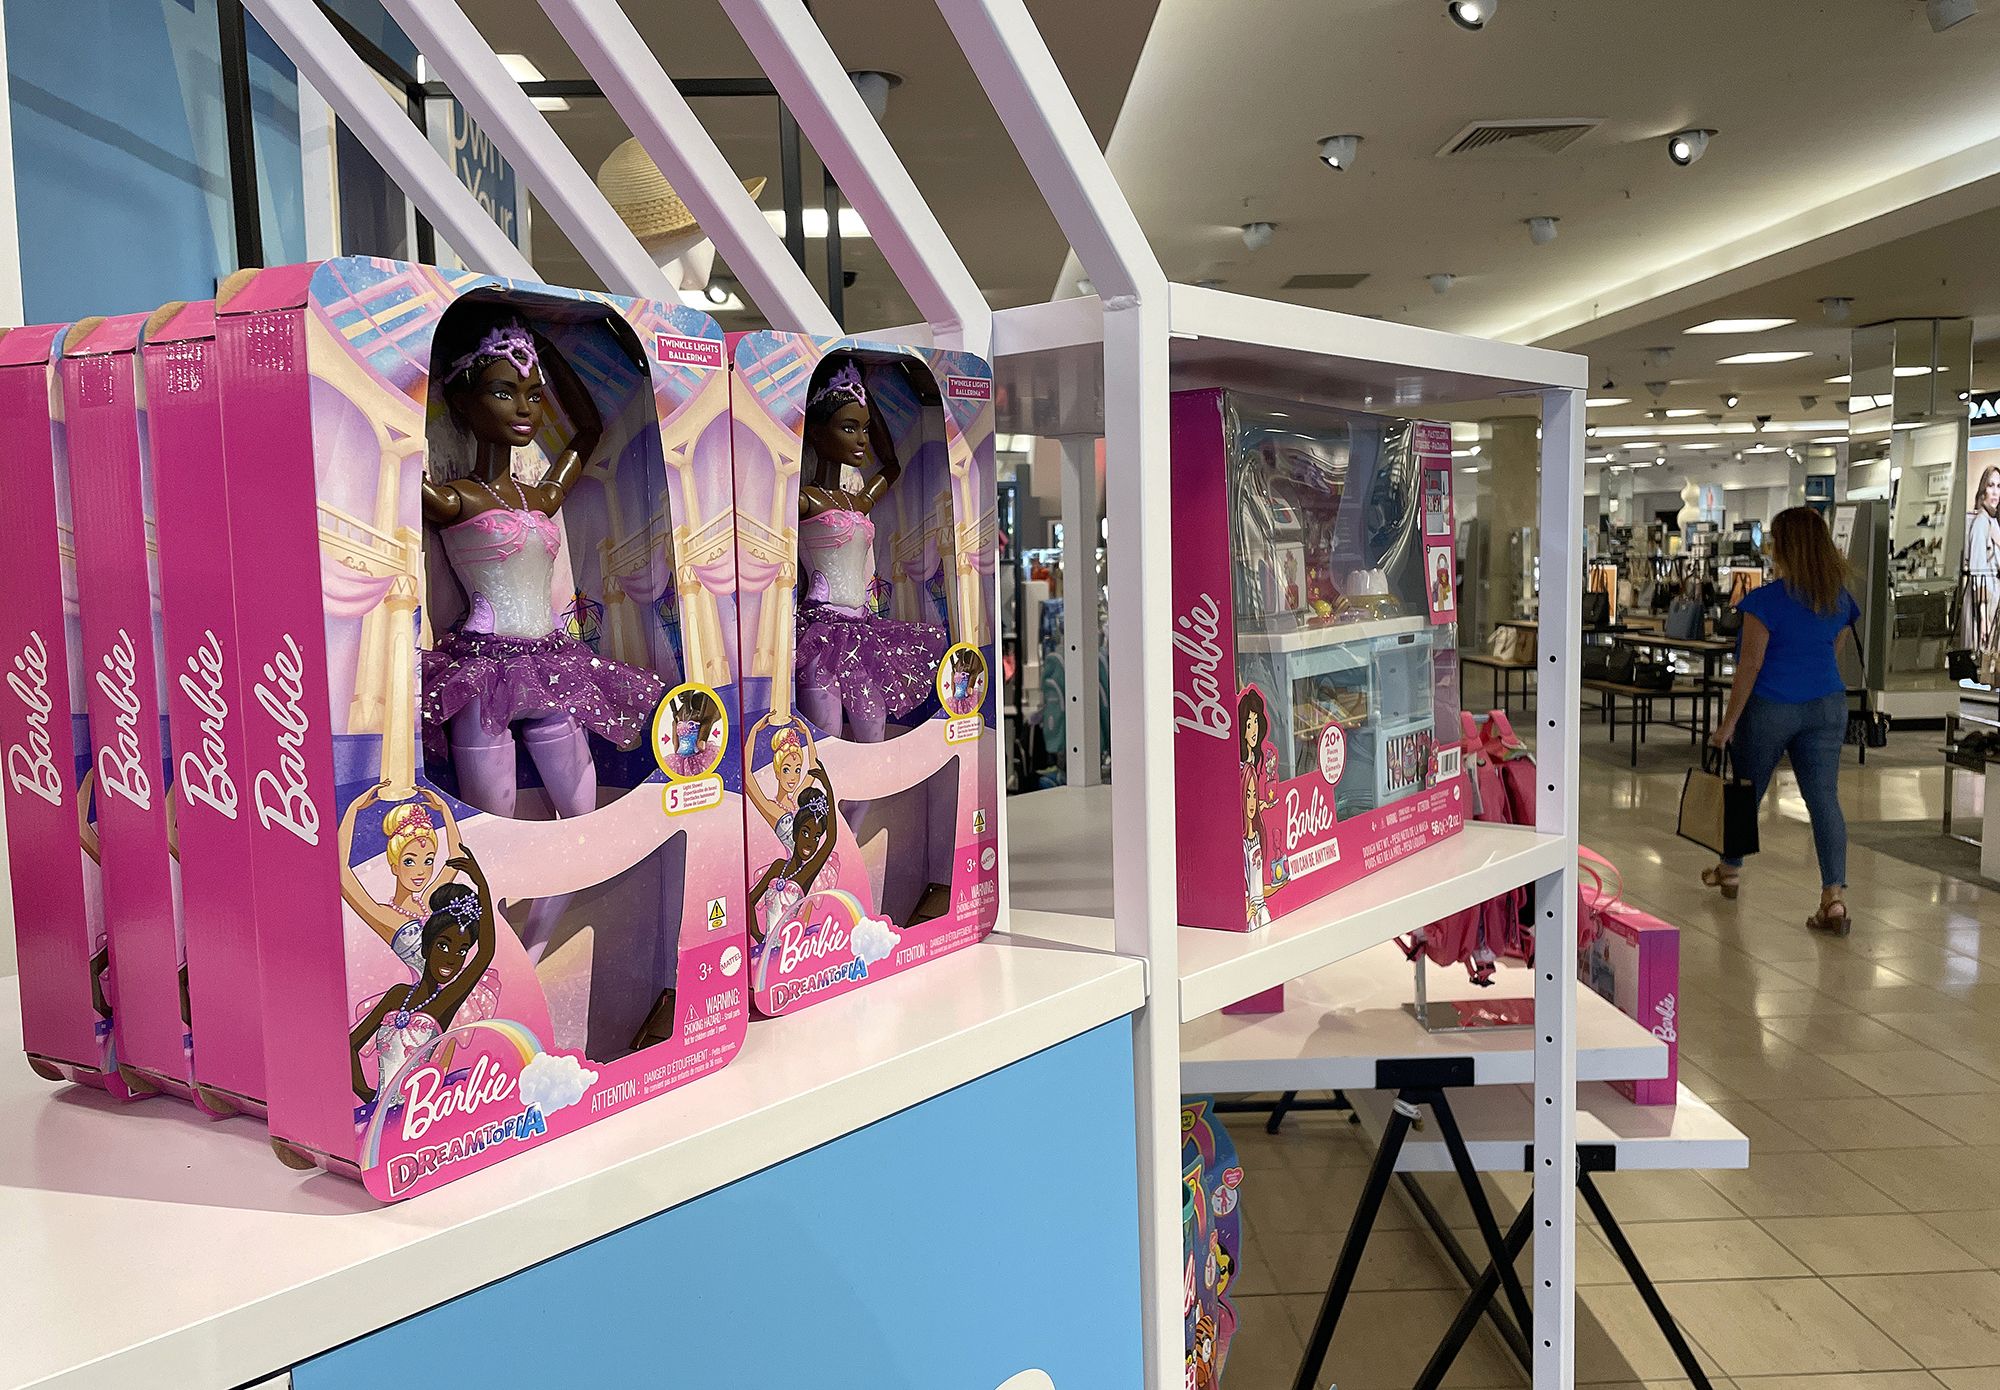 Thrift Store Dolls: Taylor Swift  Taylor swift merchandise, Celebrity  barbie dolls, Taylor swift